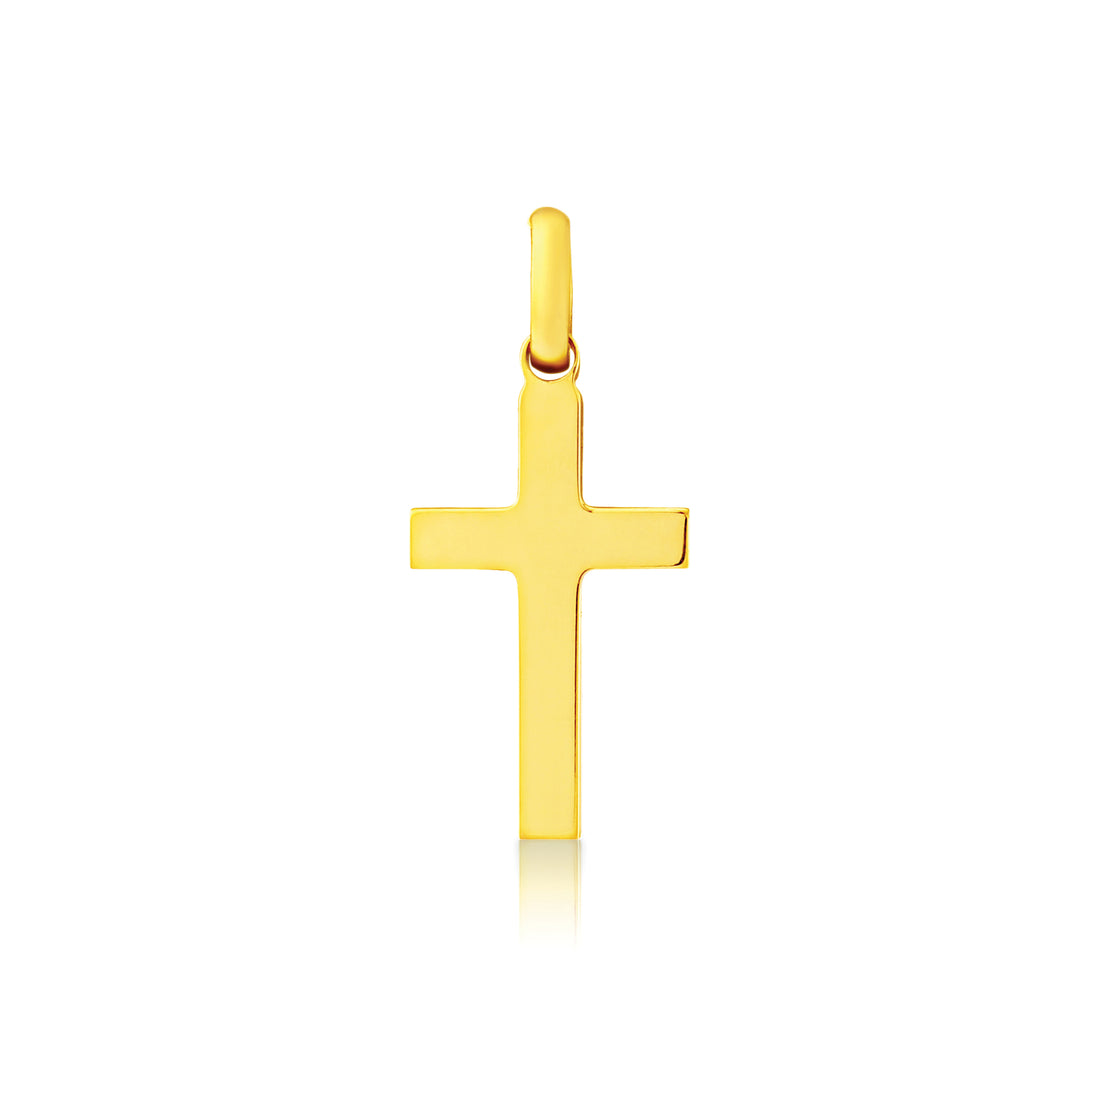 9ct. Yellow Gold Solid Cross Pendant - Robert Anthony Jewellers, Edinburgh